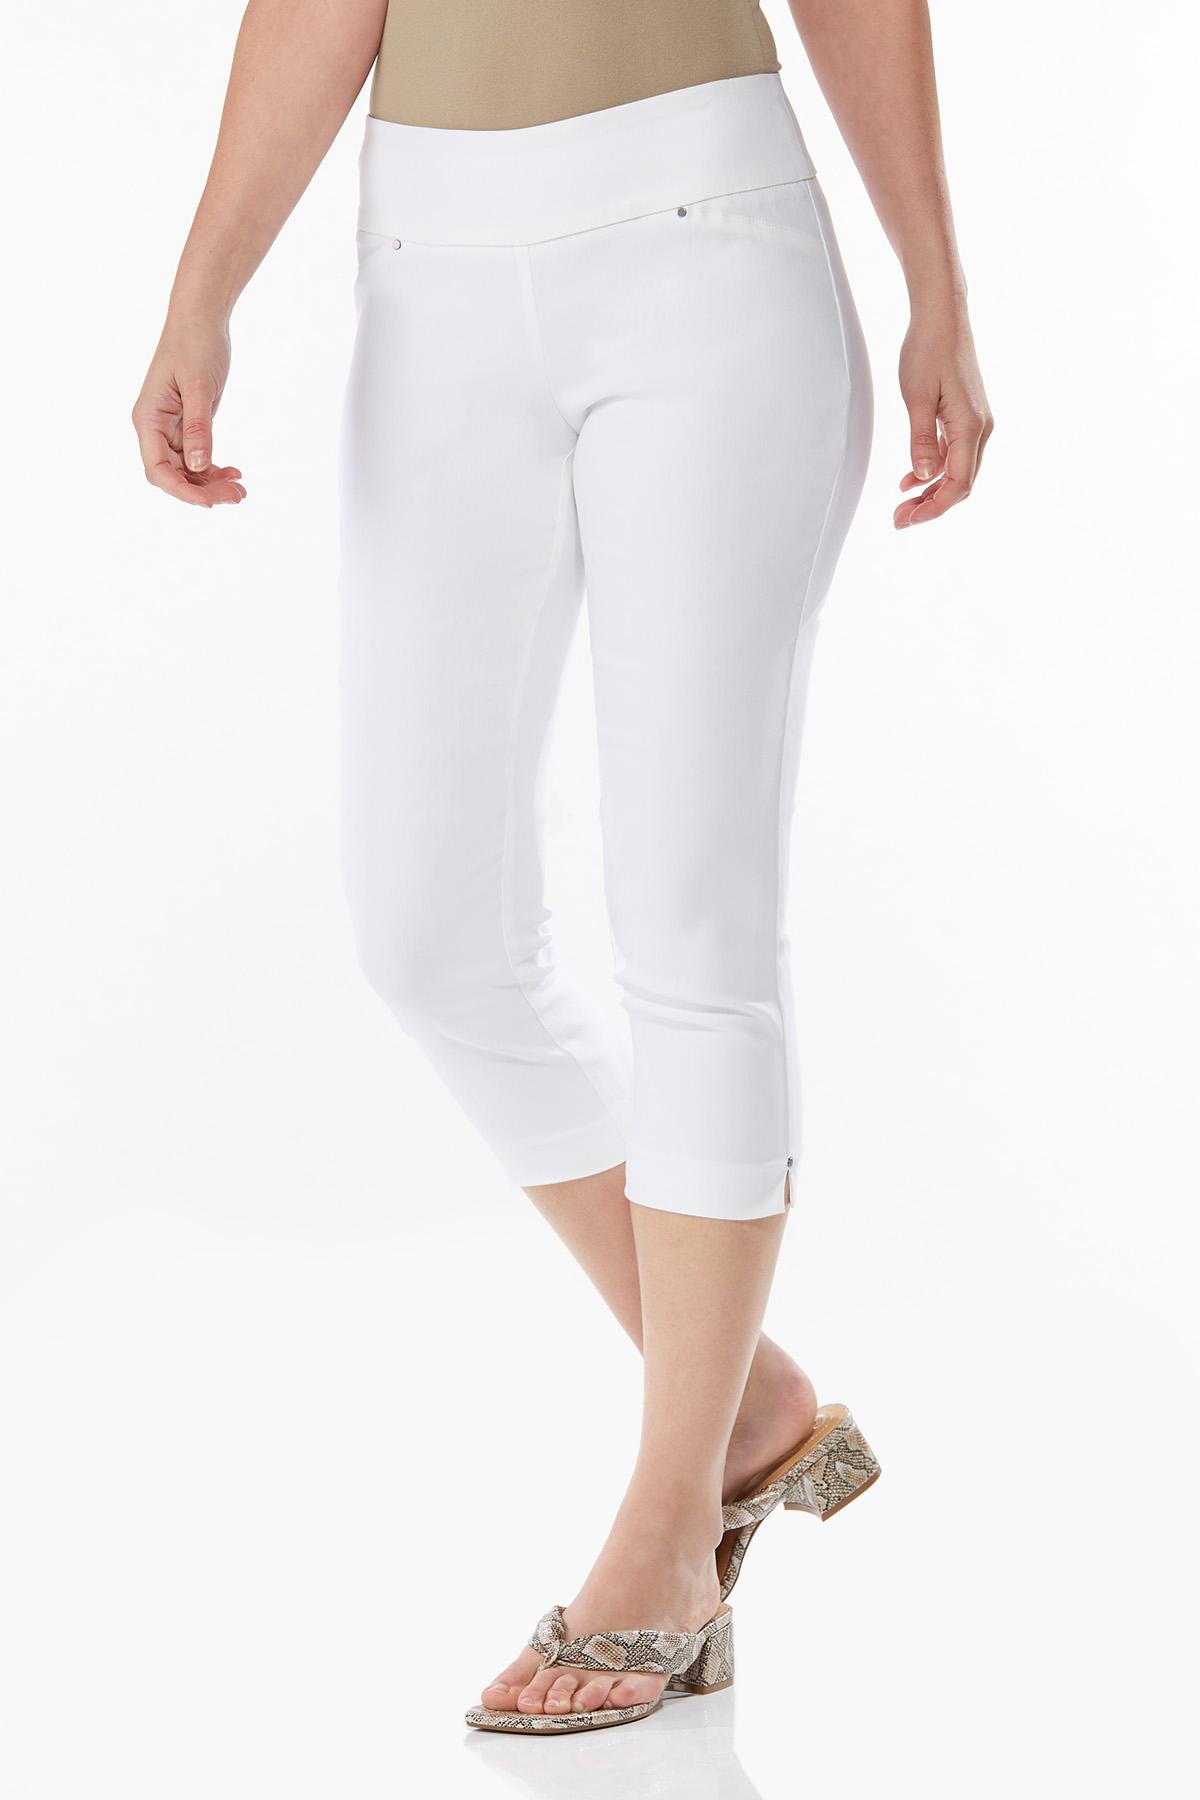 Solid Color Capris Pants for Women Mlide High Wasited Super Soft Capri Leggings